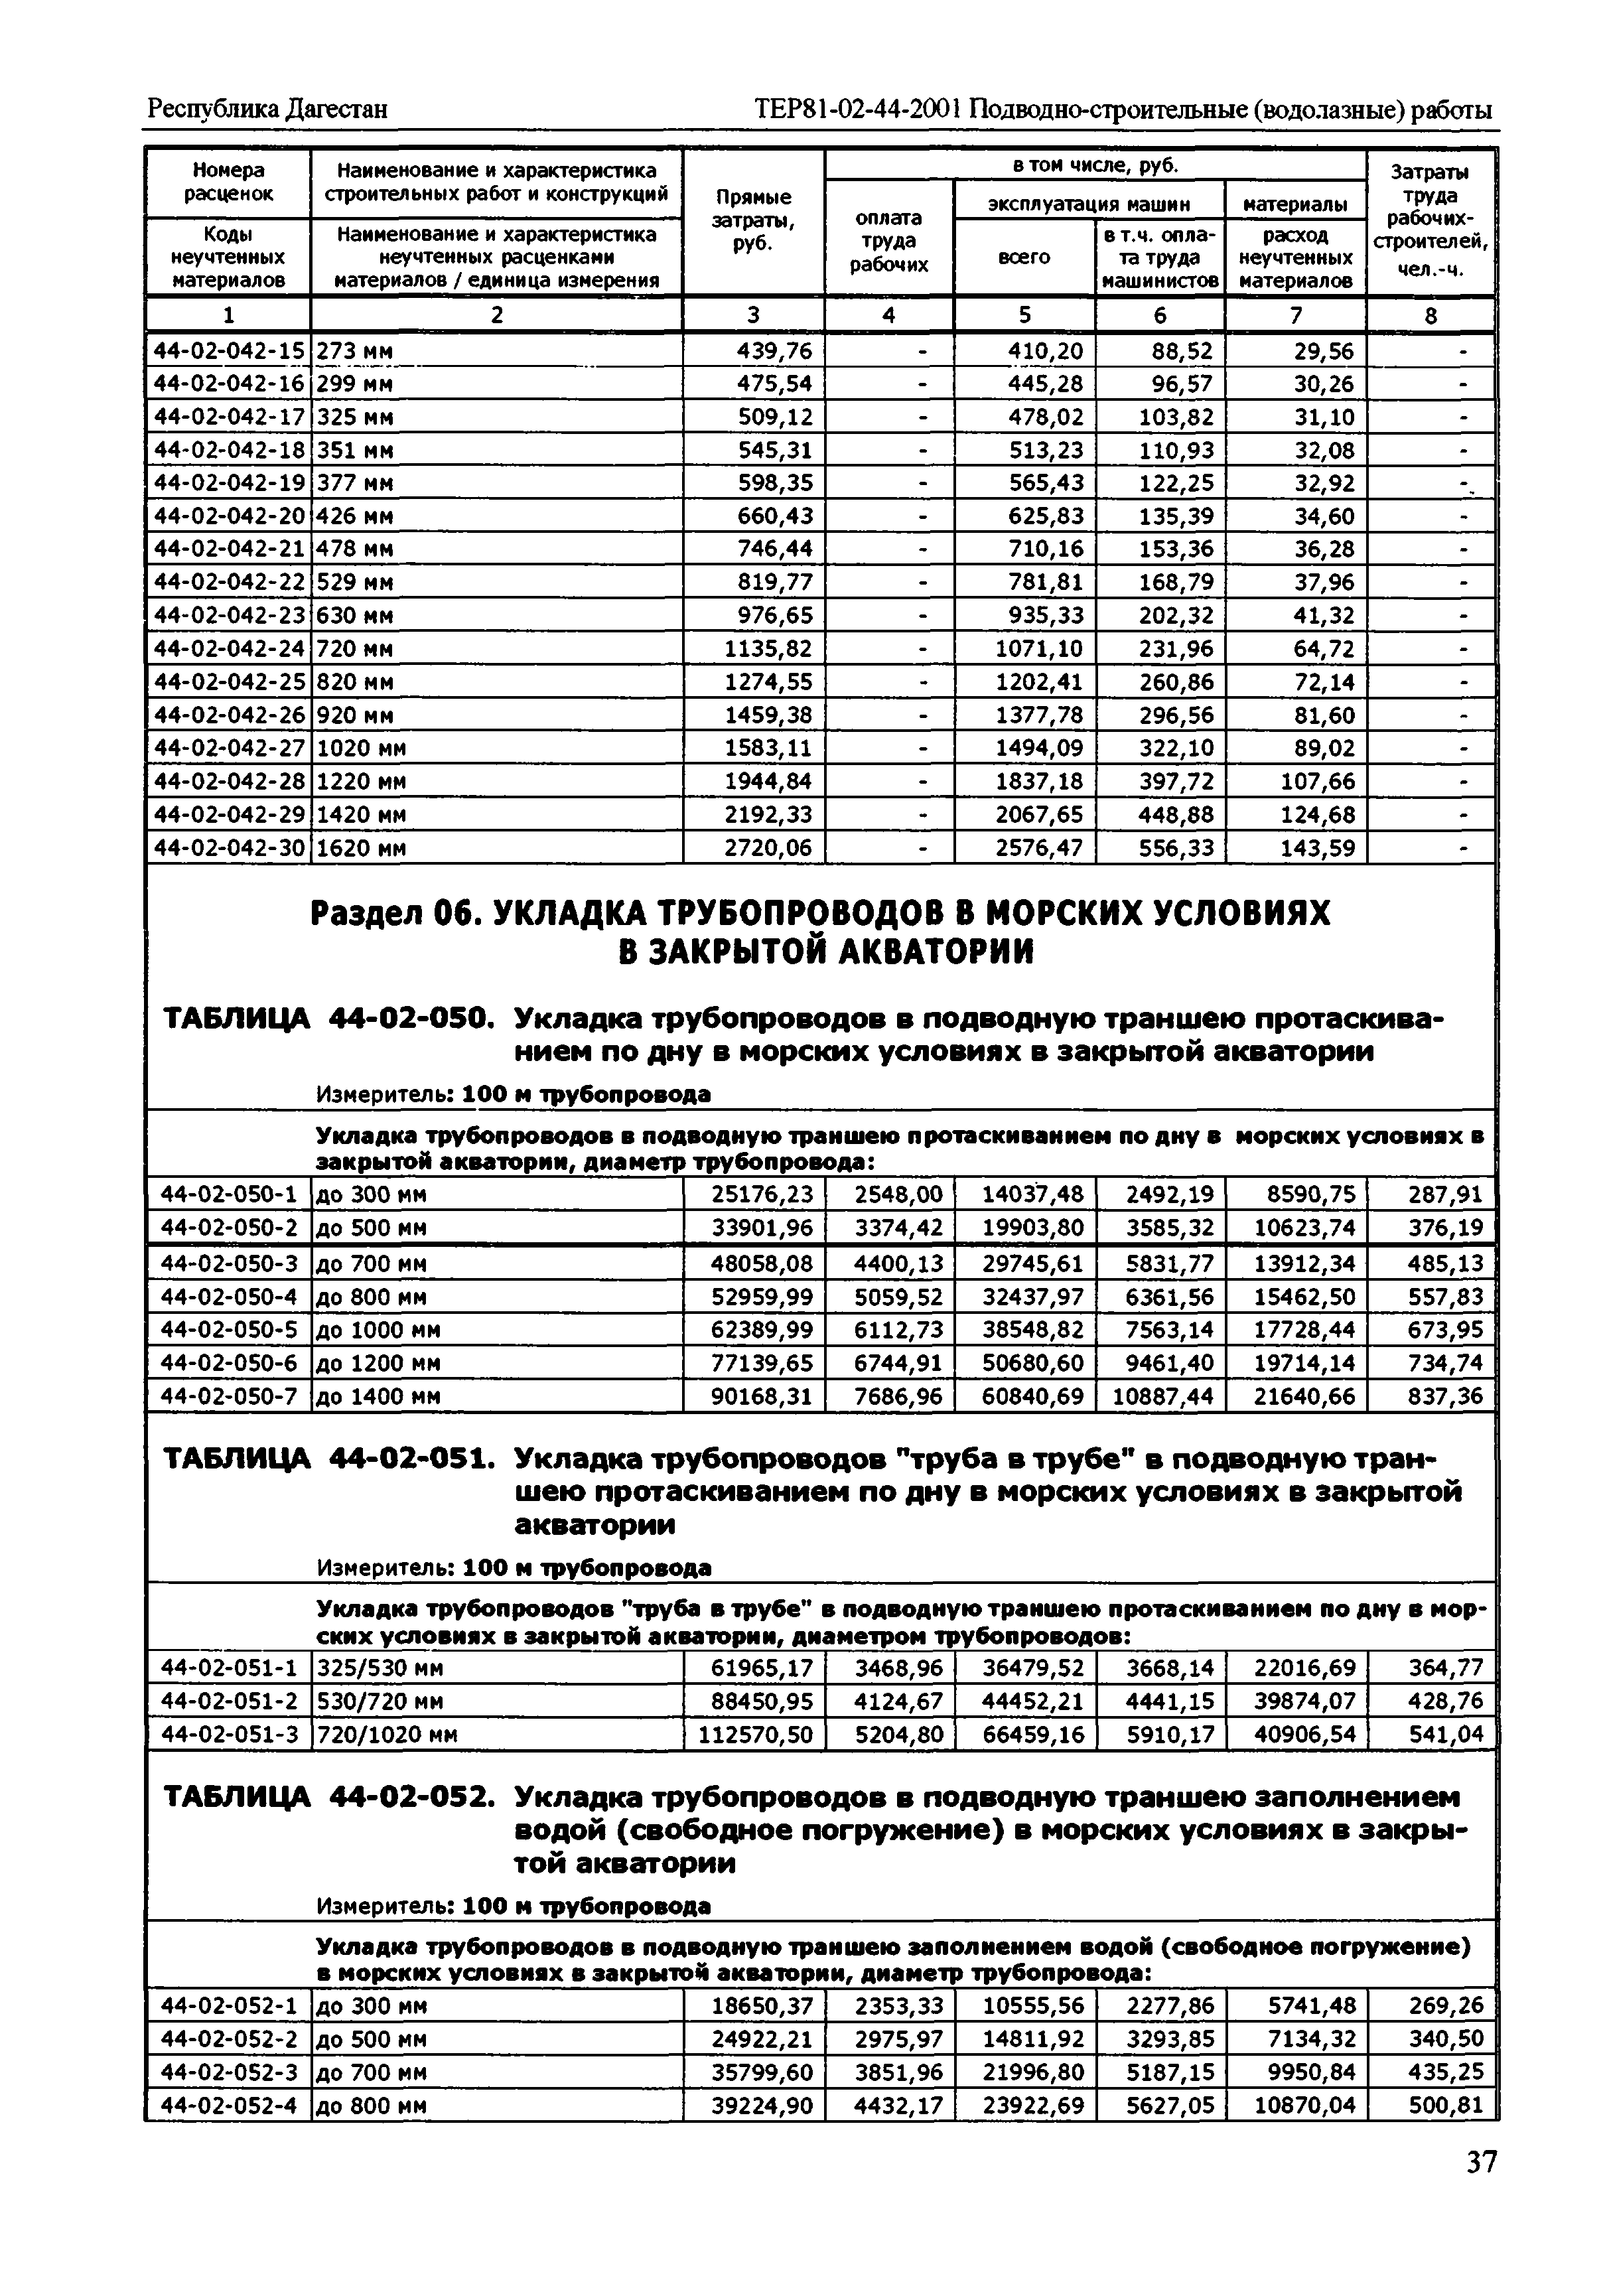 ТЕР Республика Дагестан 2001-44